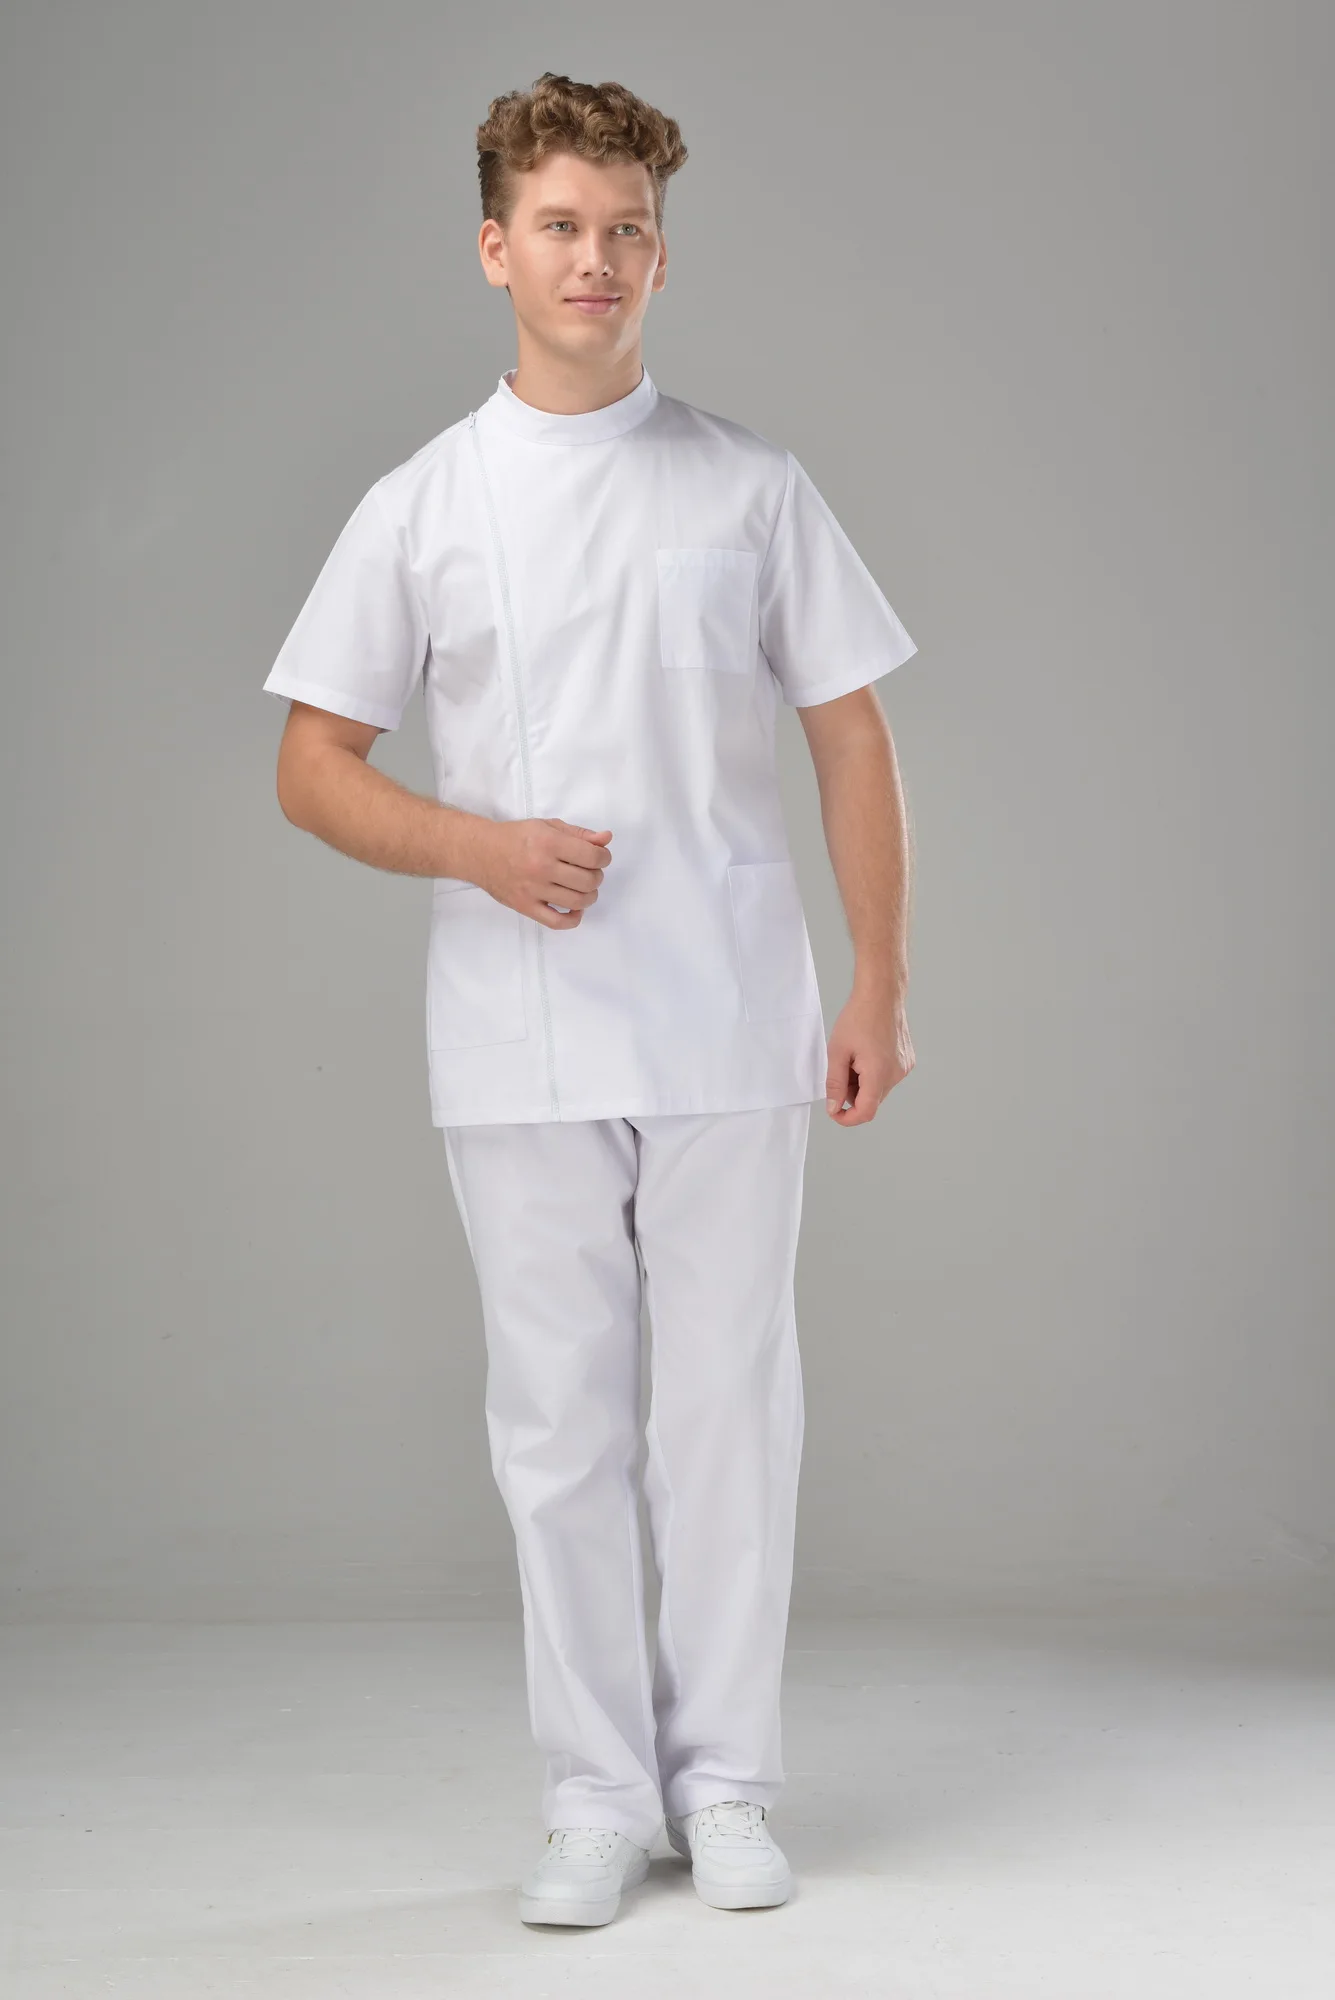 Fashionable Male Nurse Uniform Buy Fashionable Male Nurse Uniform